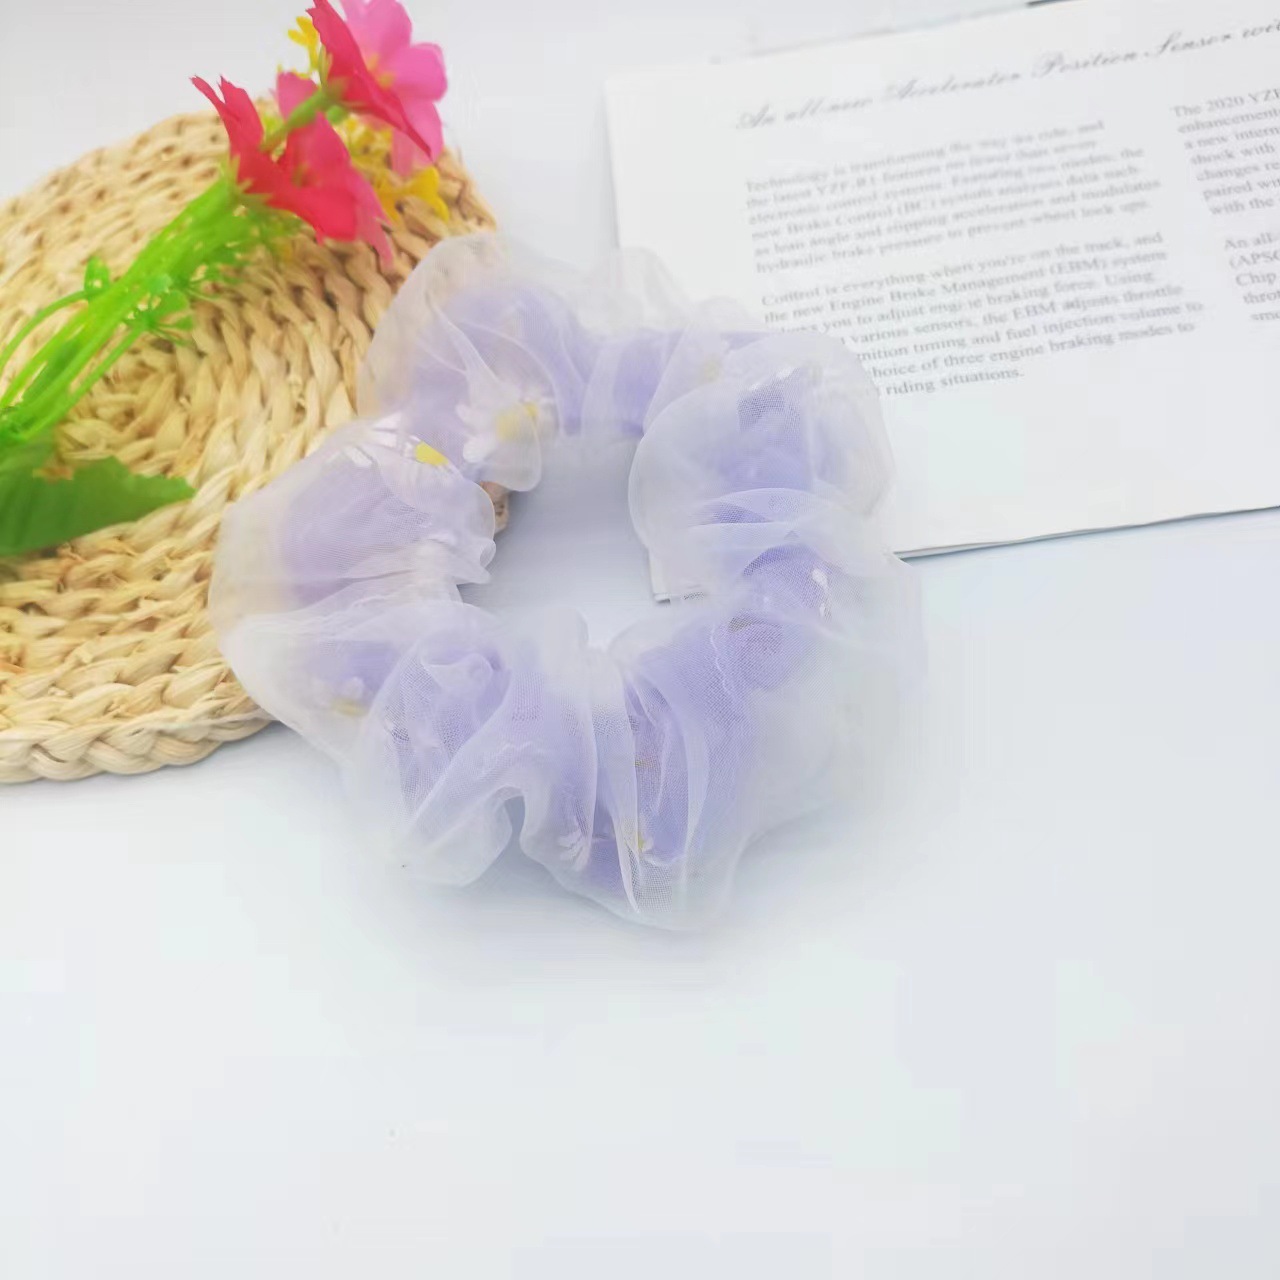 Provence Lavendel